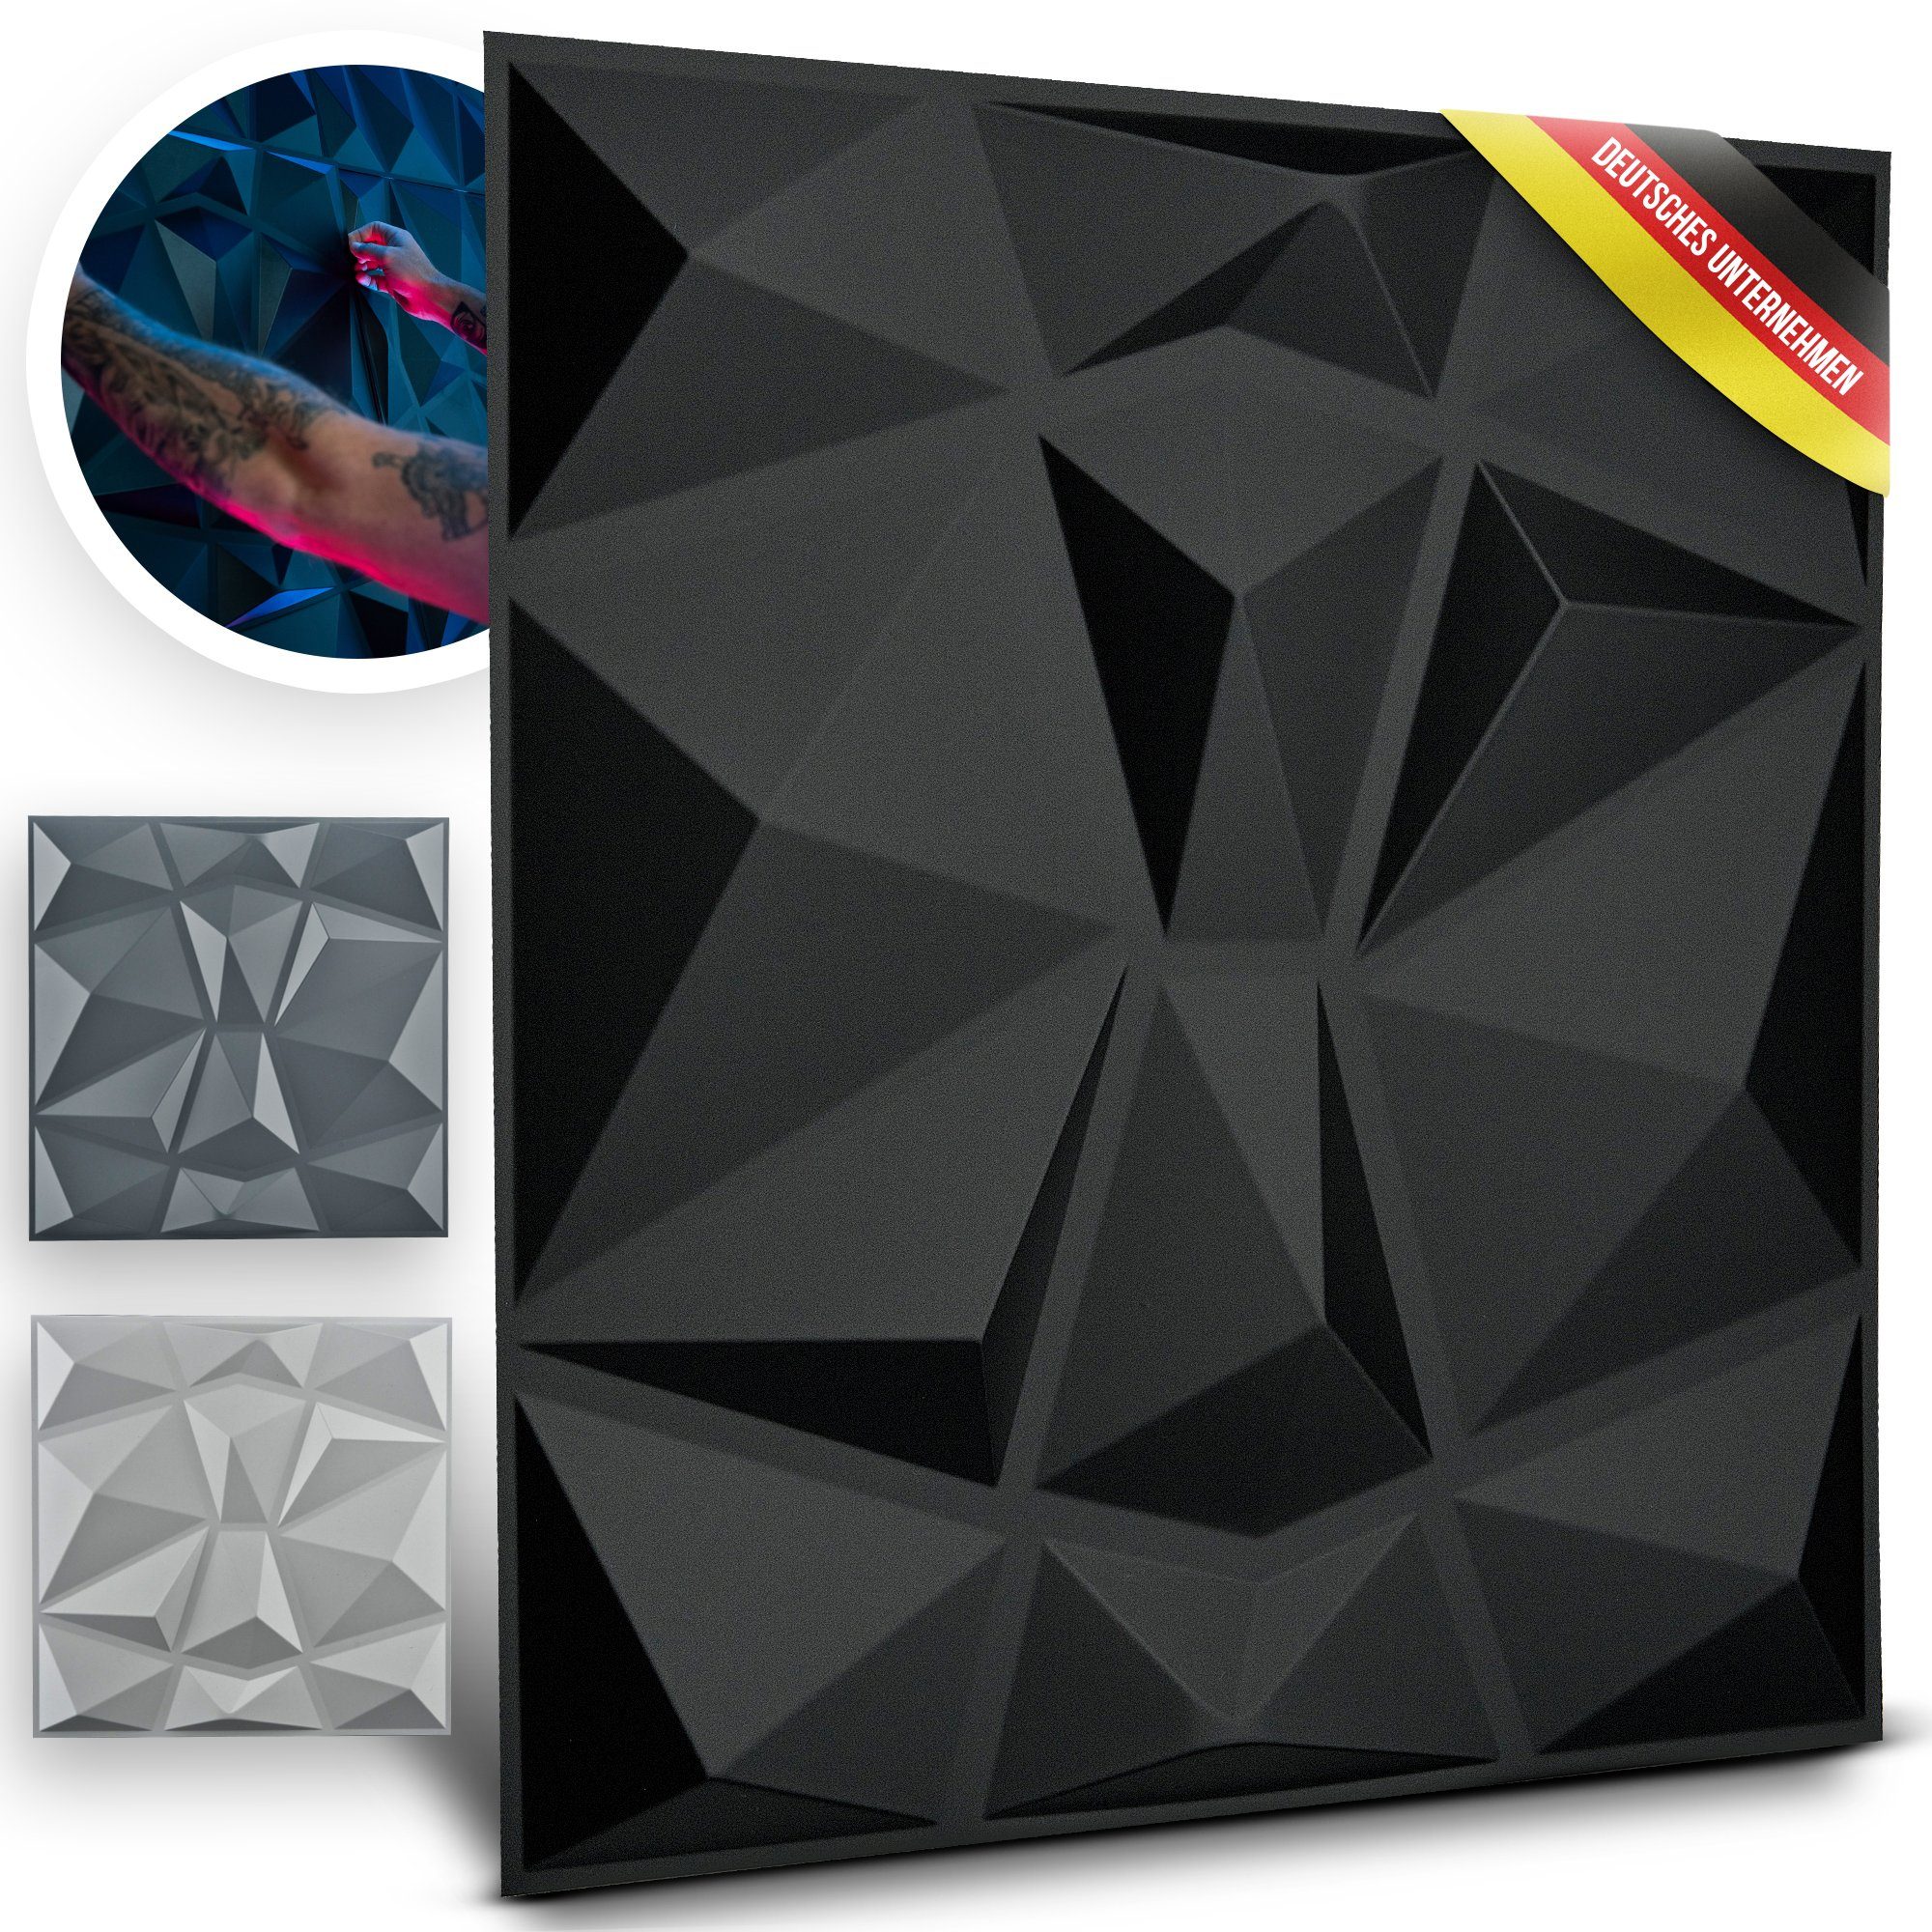 WANEELL 3D Wandpaneel Diamond, BxL: 50,00x50,00 cm, 3,00 qm, (12 stück, Hochwertige PVC Paneele ideal für die Gaming Wand) PVC